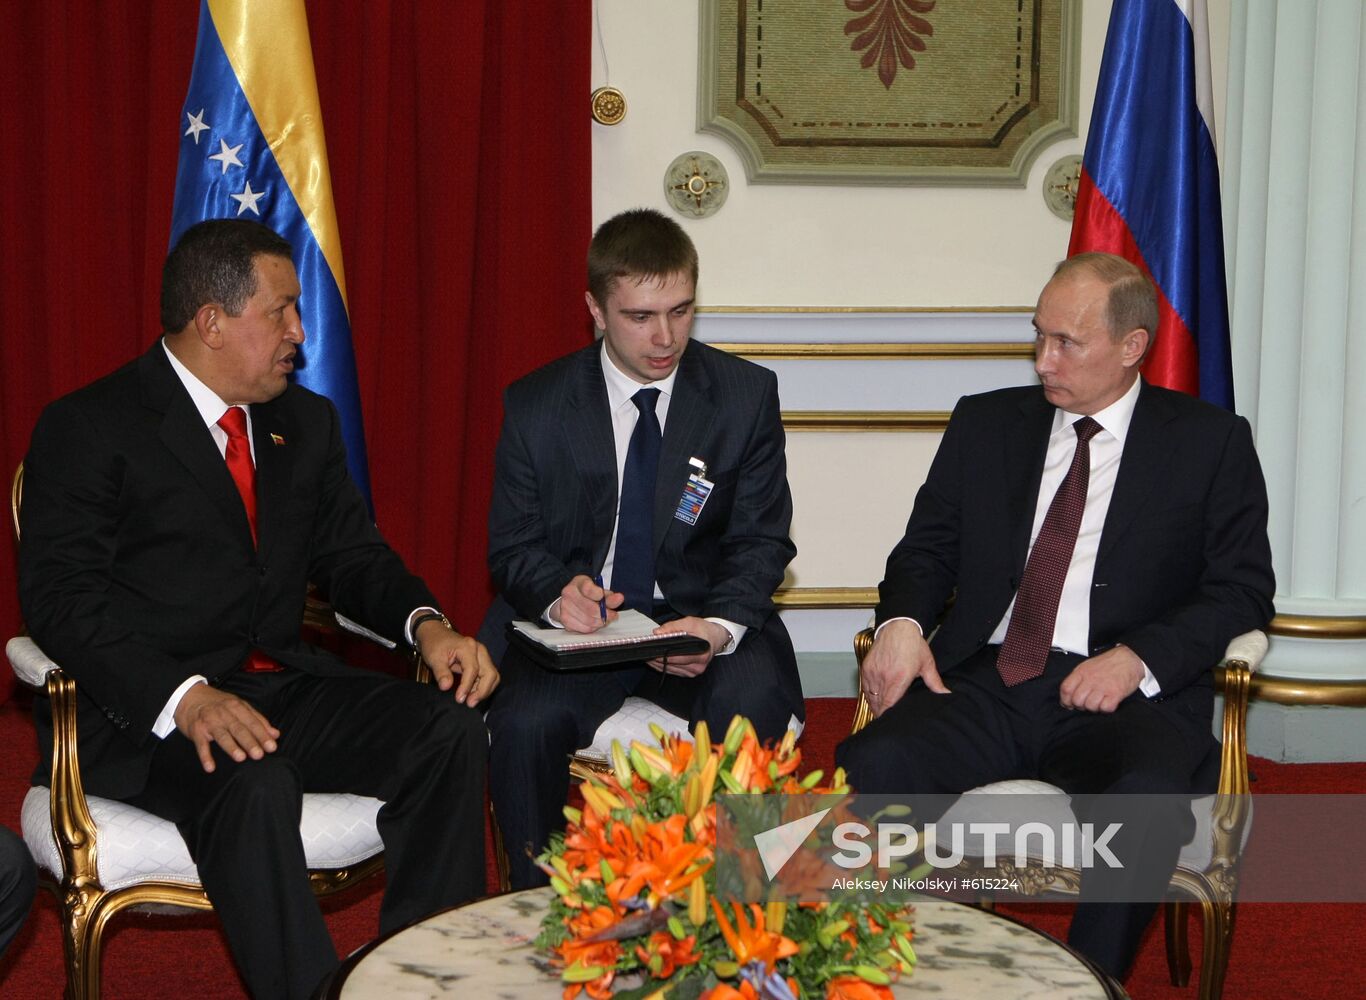 Prime Minister Vladimir Putin meets with Hugo Chavez